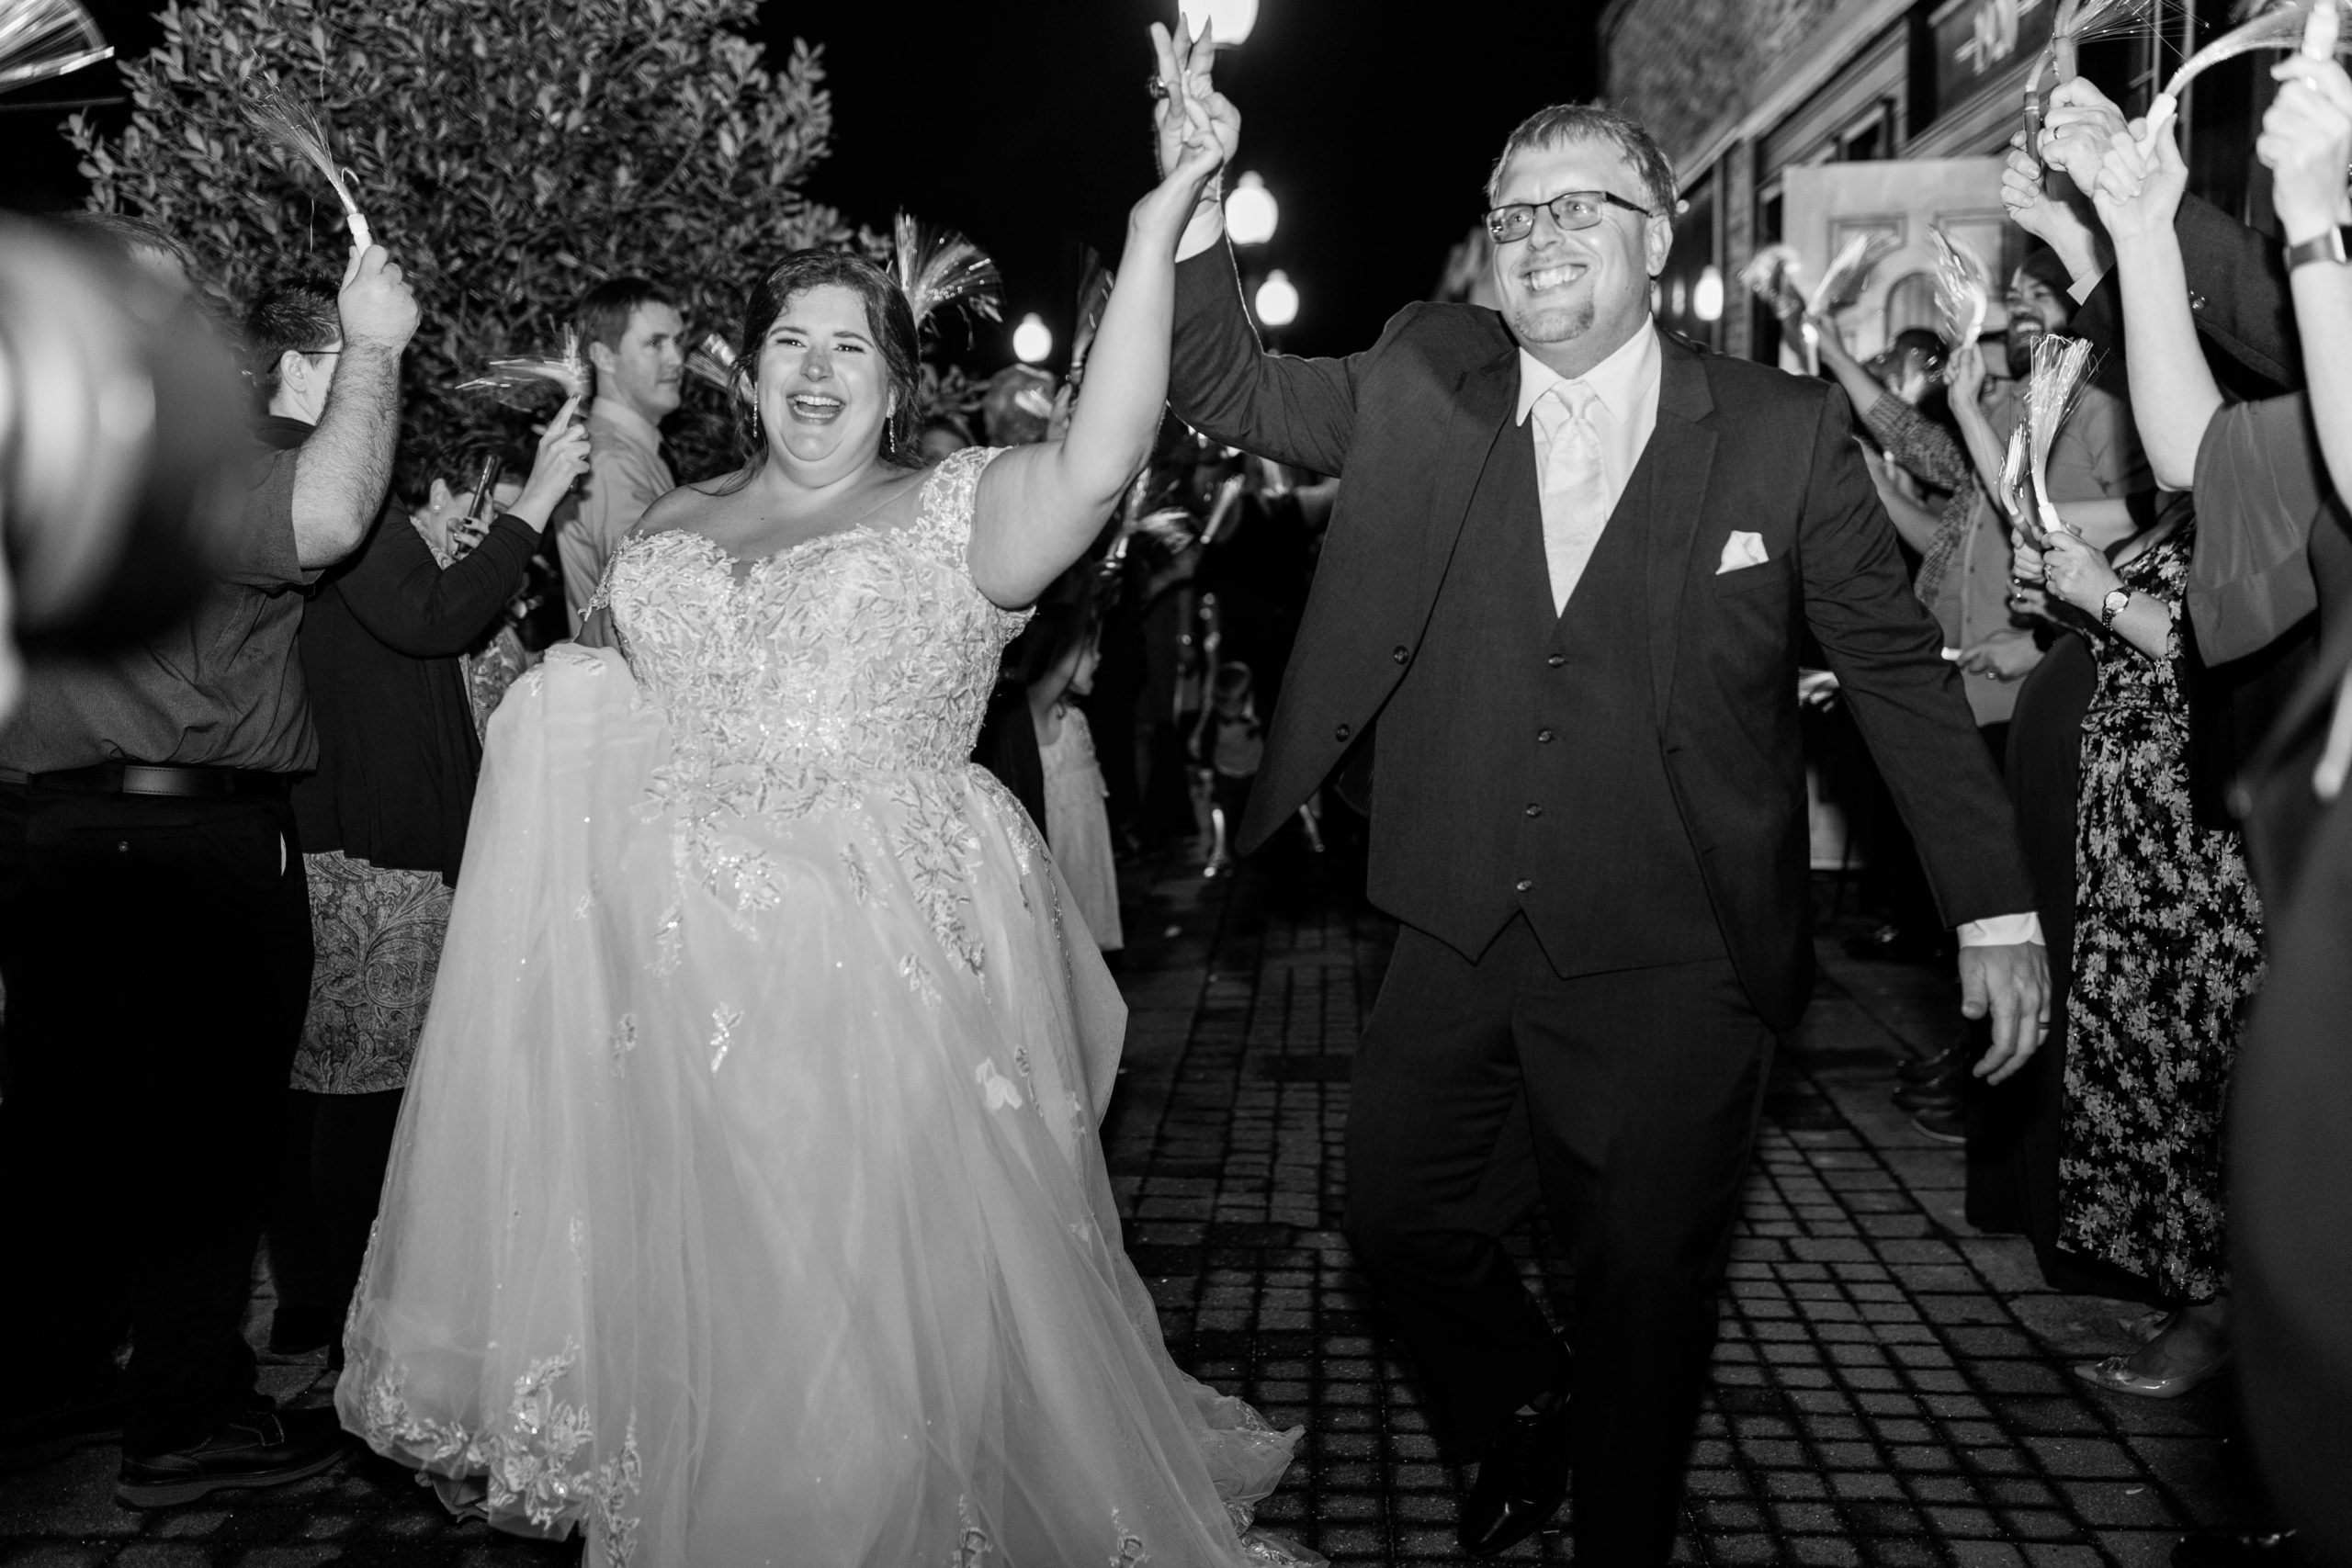 Eleanor Stenner Photography - a Birmingham, Alabama Wedding Photographer - shares the best honeymoon locations for newlyweds